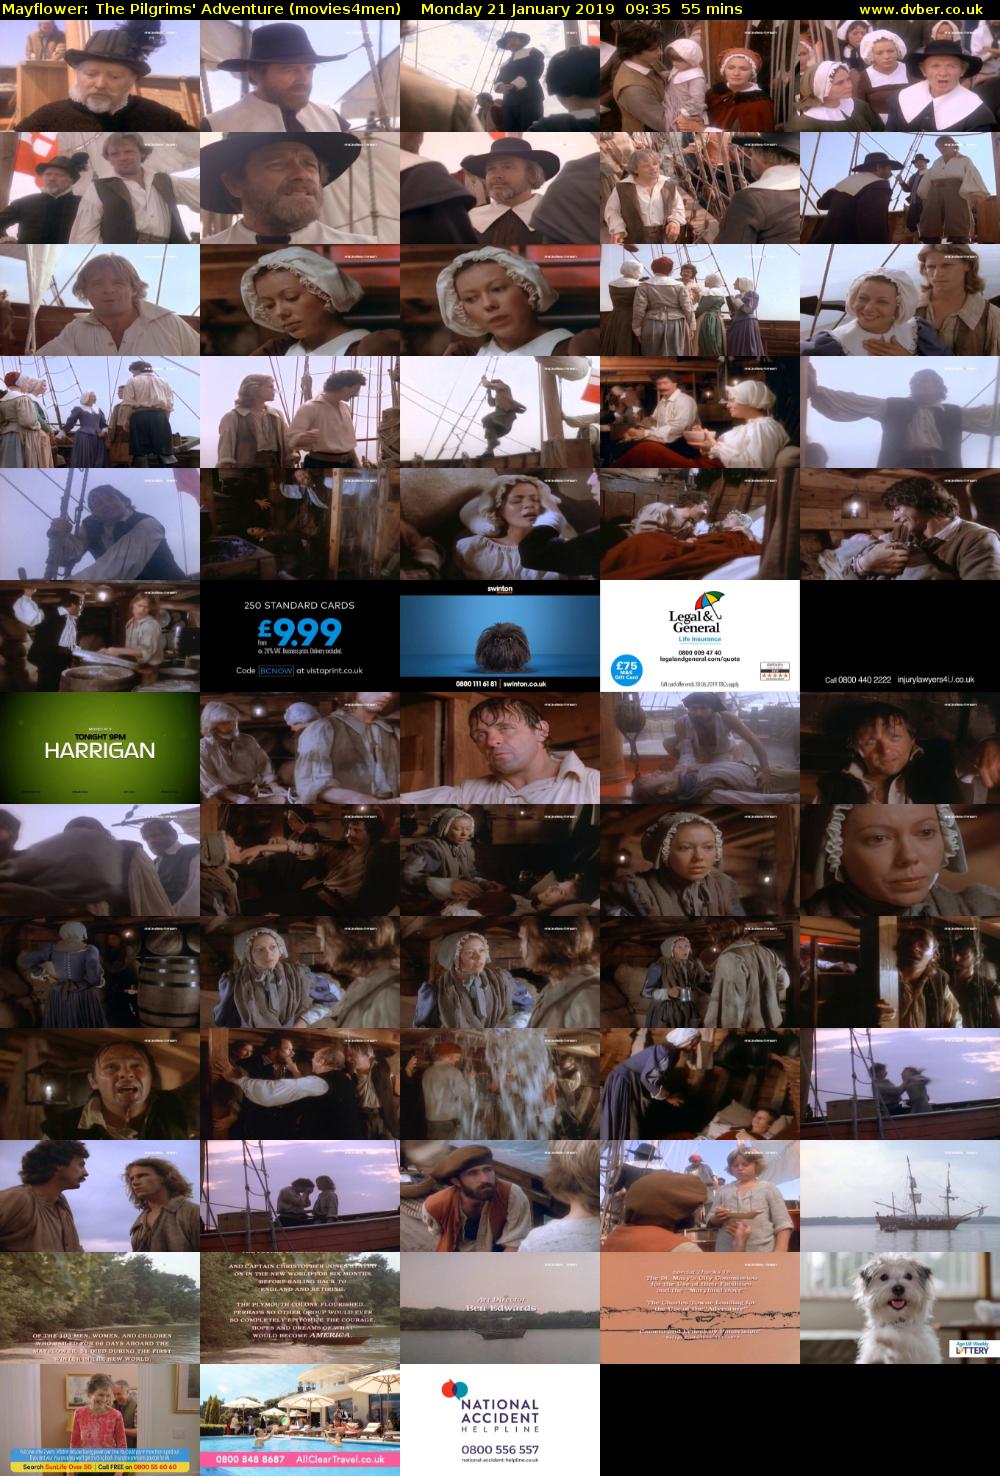 Mayflower: The Pilgrims' Adventure (movies4men) Monday 21 January 2019 09:35 - 10:30